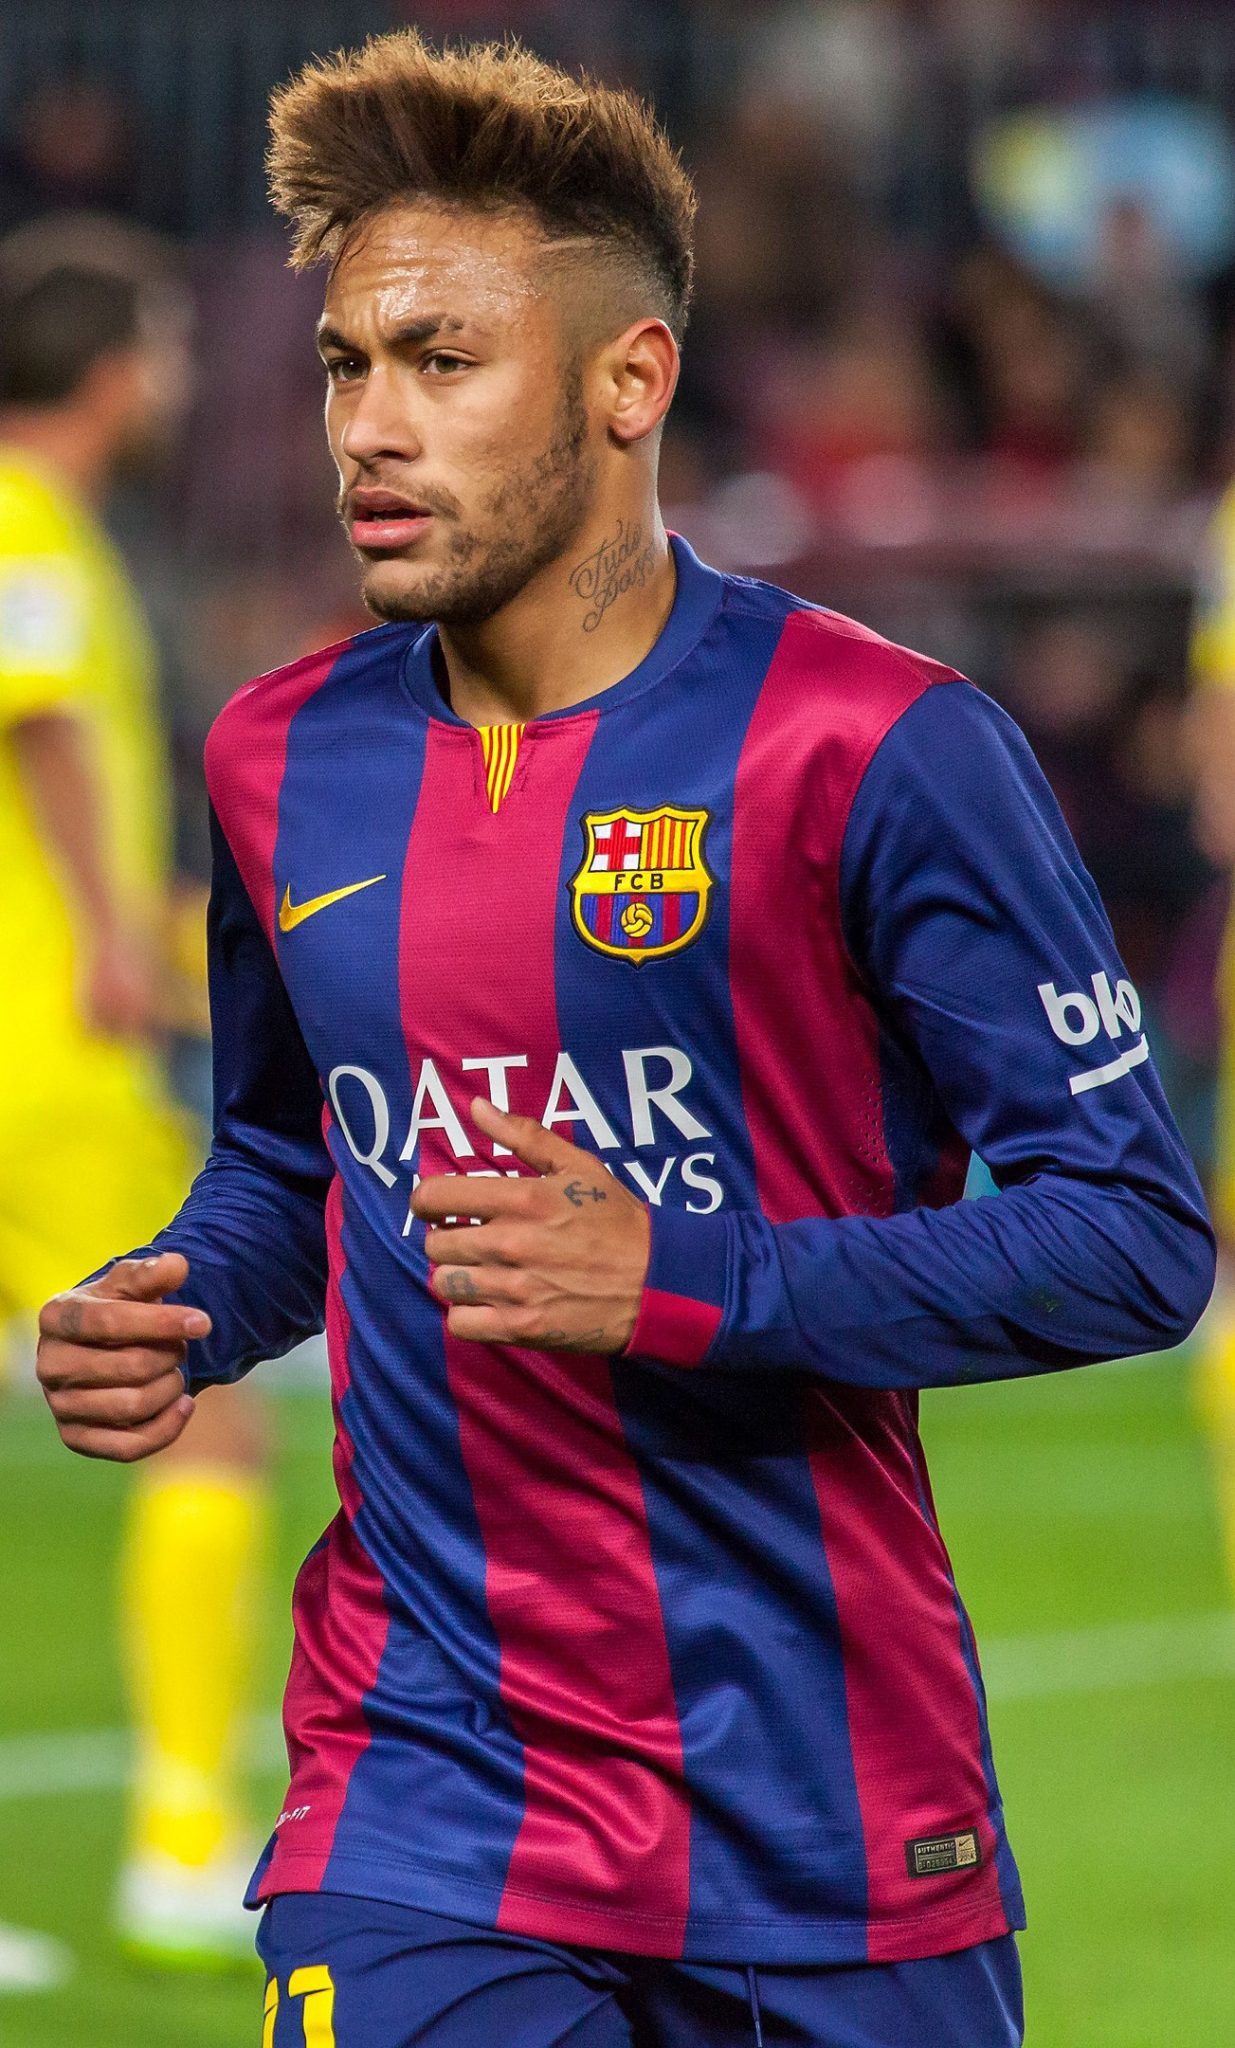 neymar soccer player biography